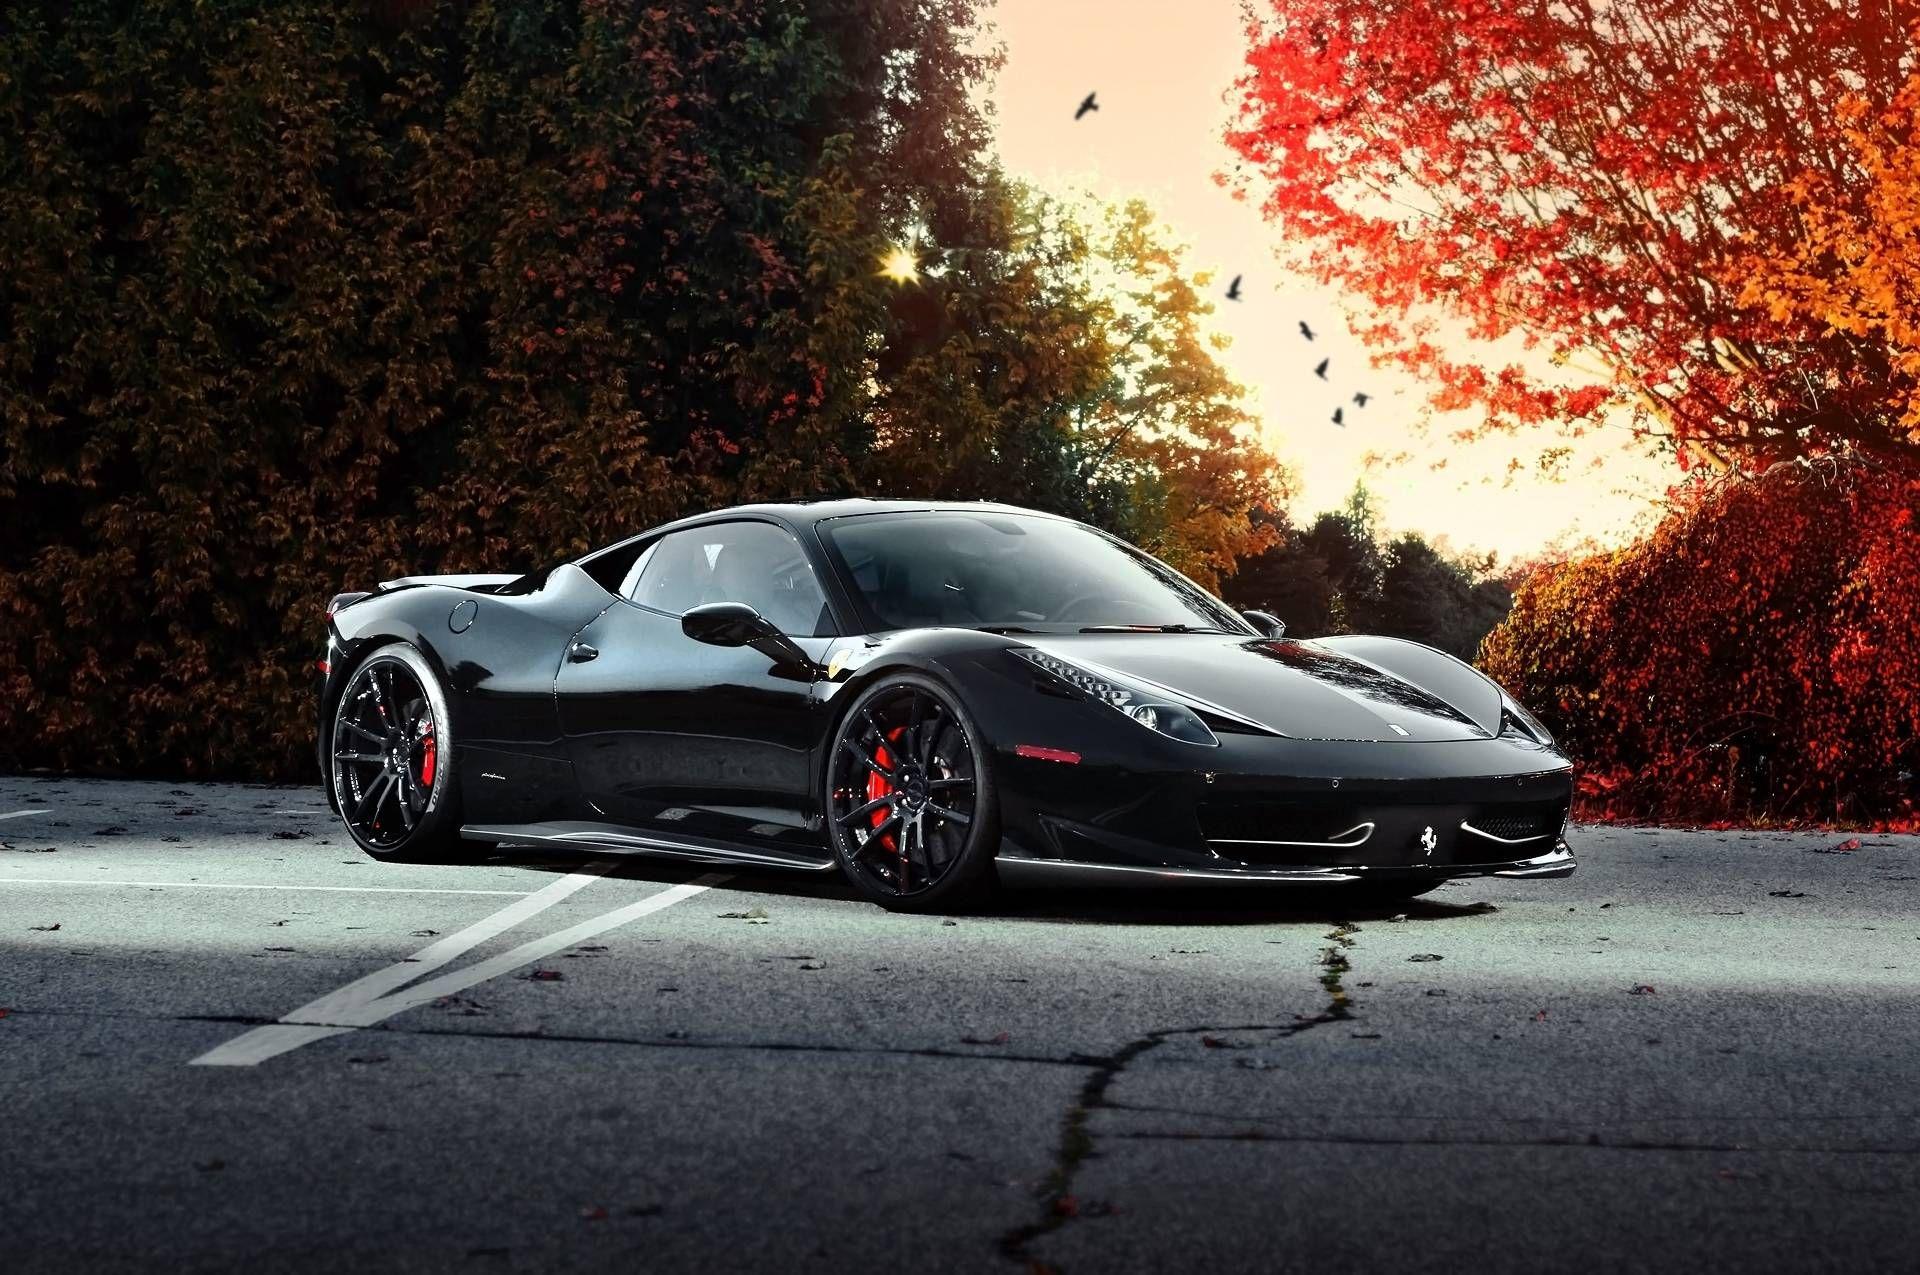 Black Ferrari Wallpaper 1080p #Syi. Cars. Ferrari car, Ferrari 458